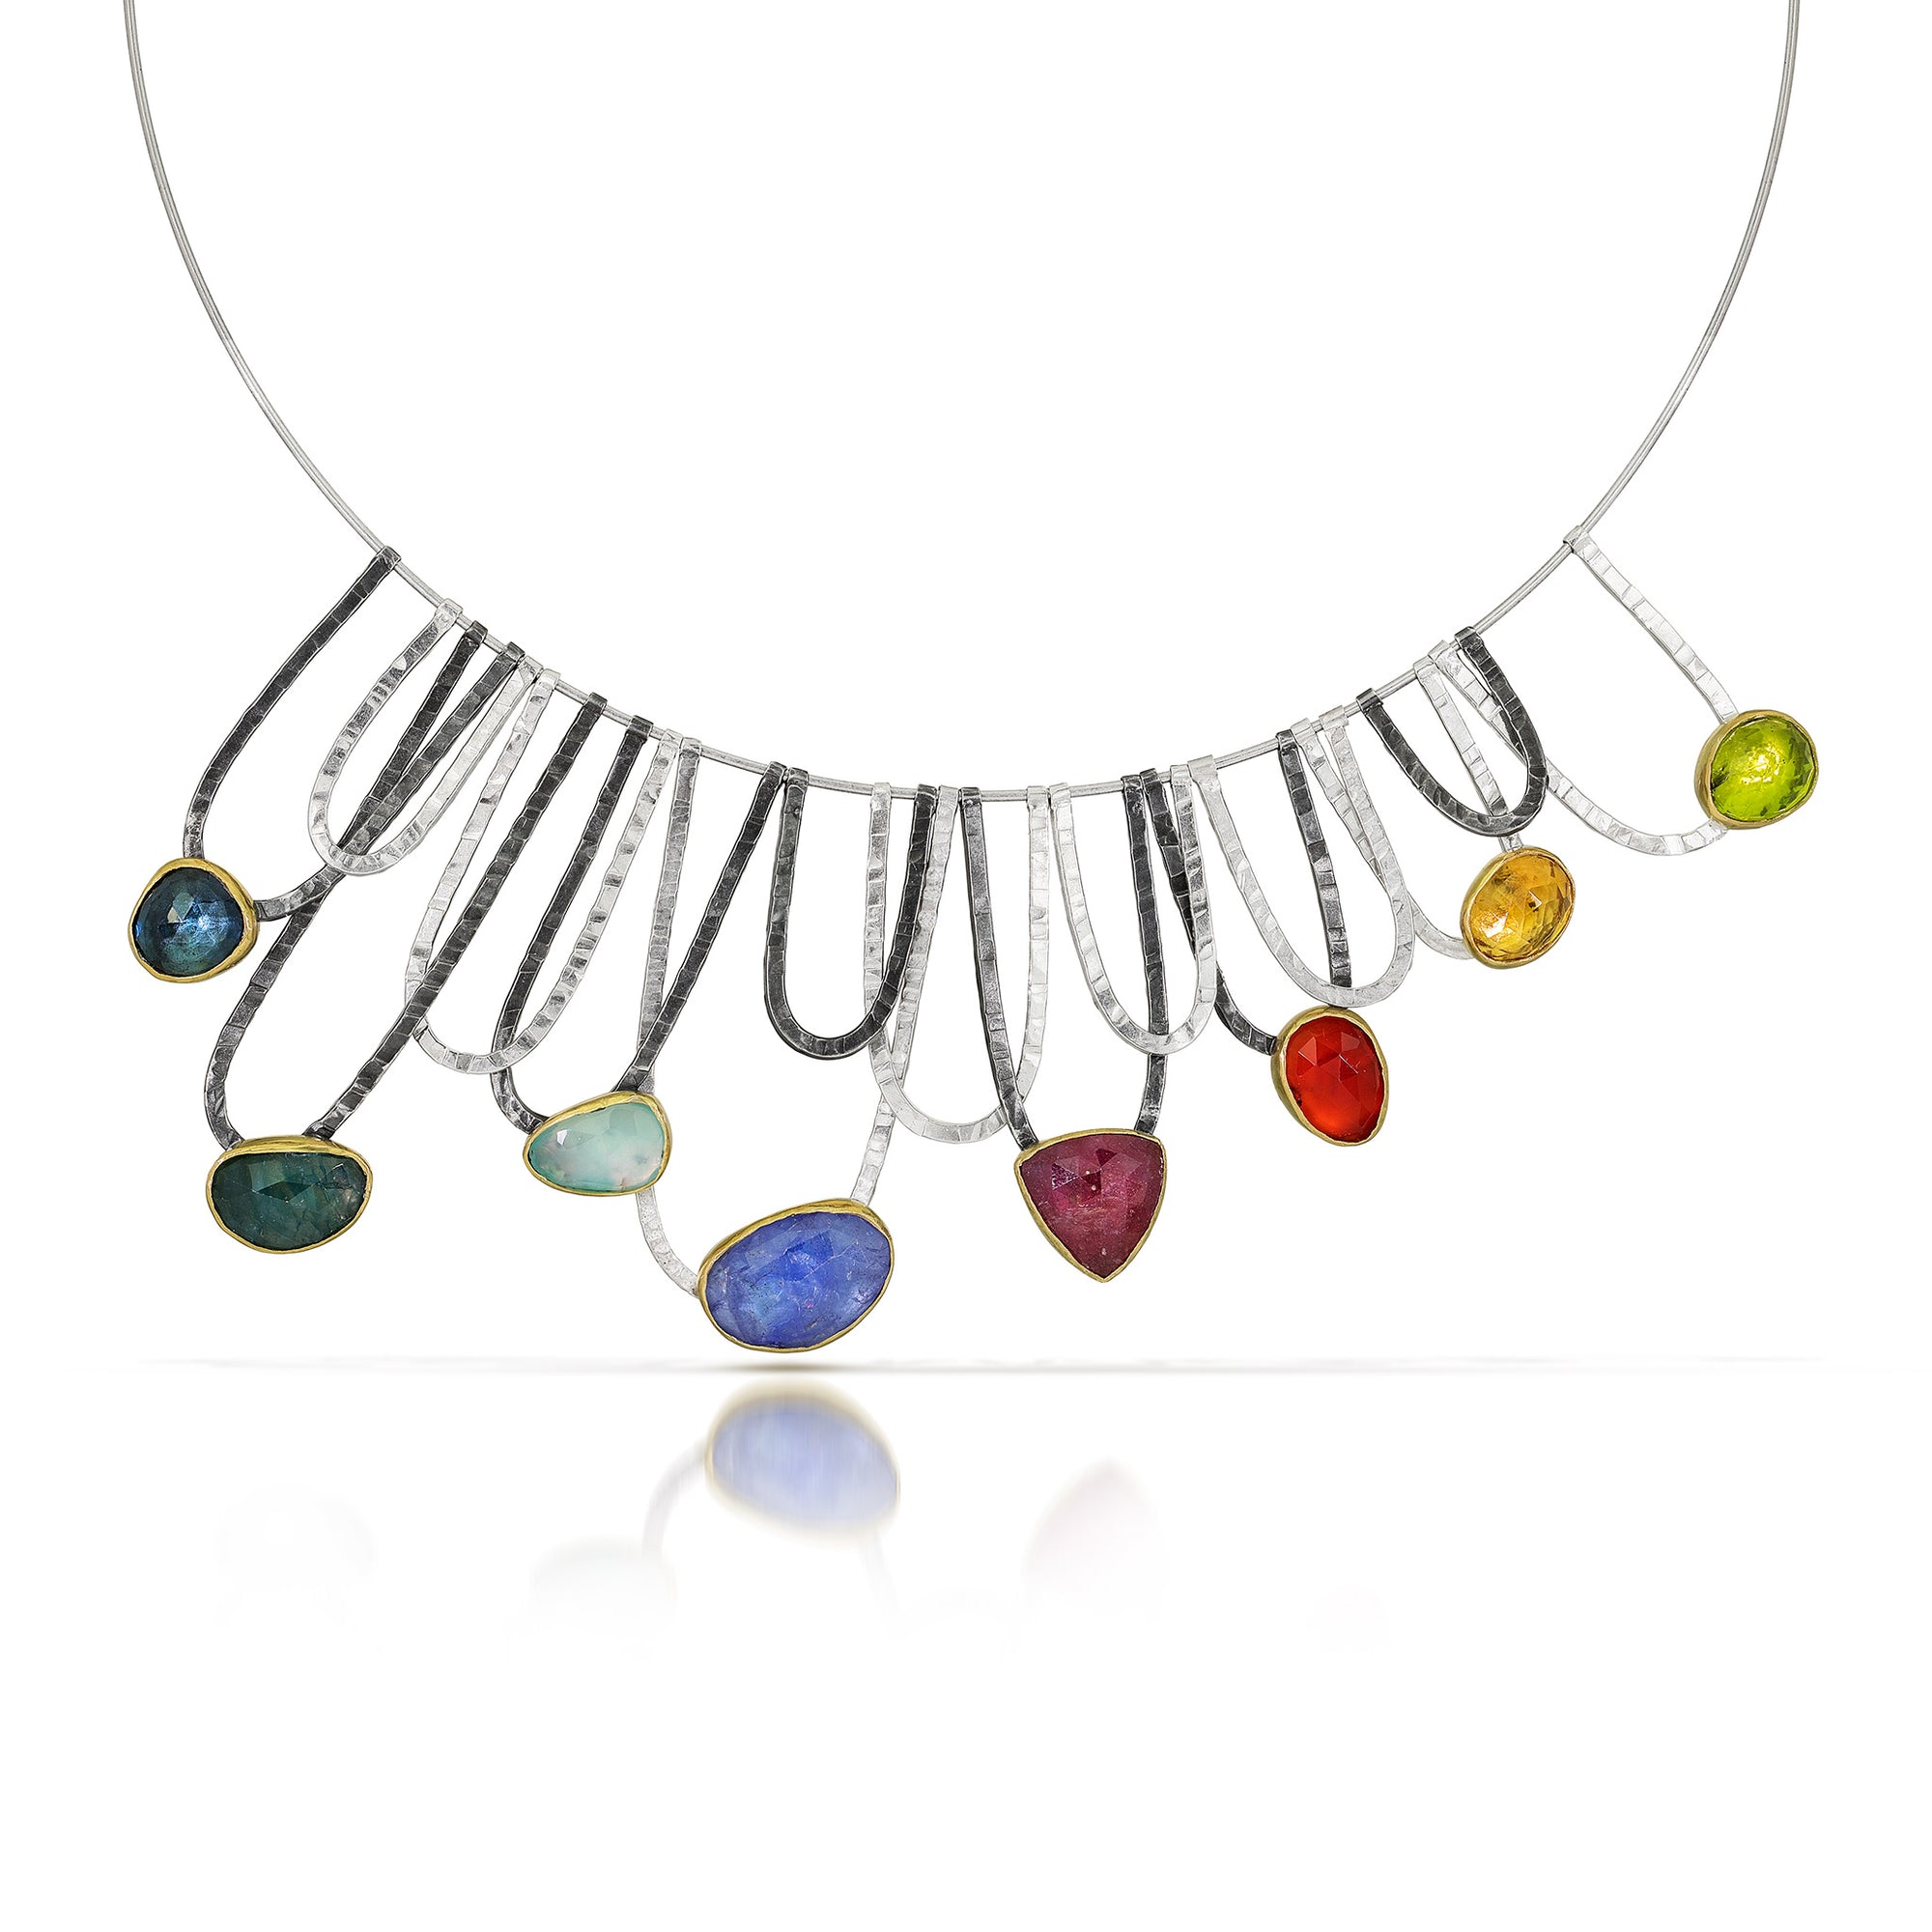 Cirque "Rainbow" - Sterling, 18k gold, gemstones necklace